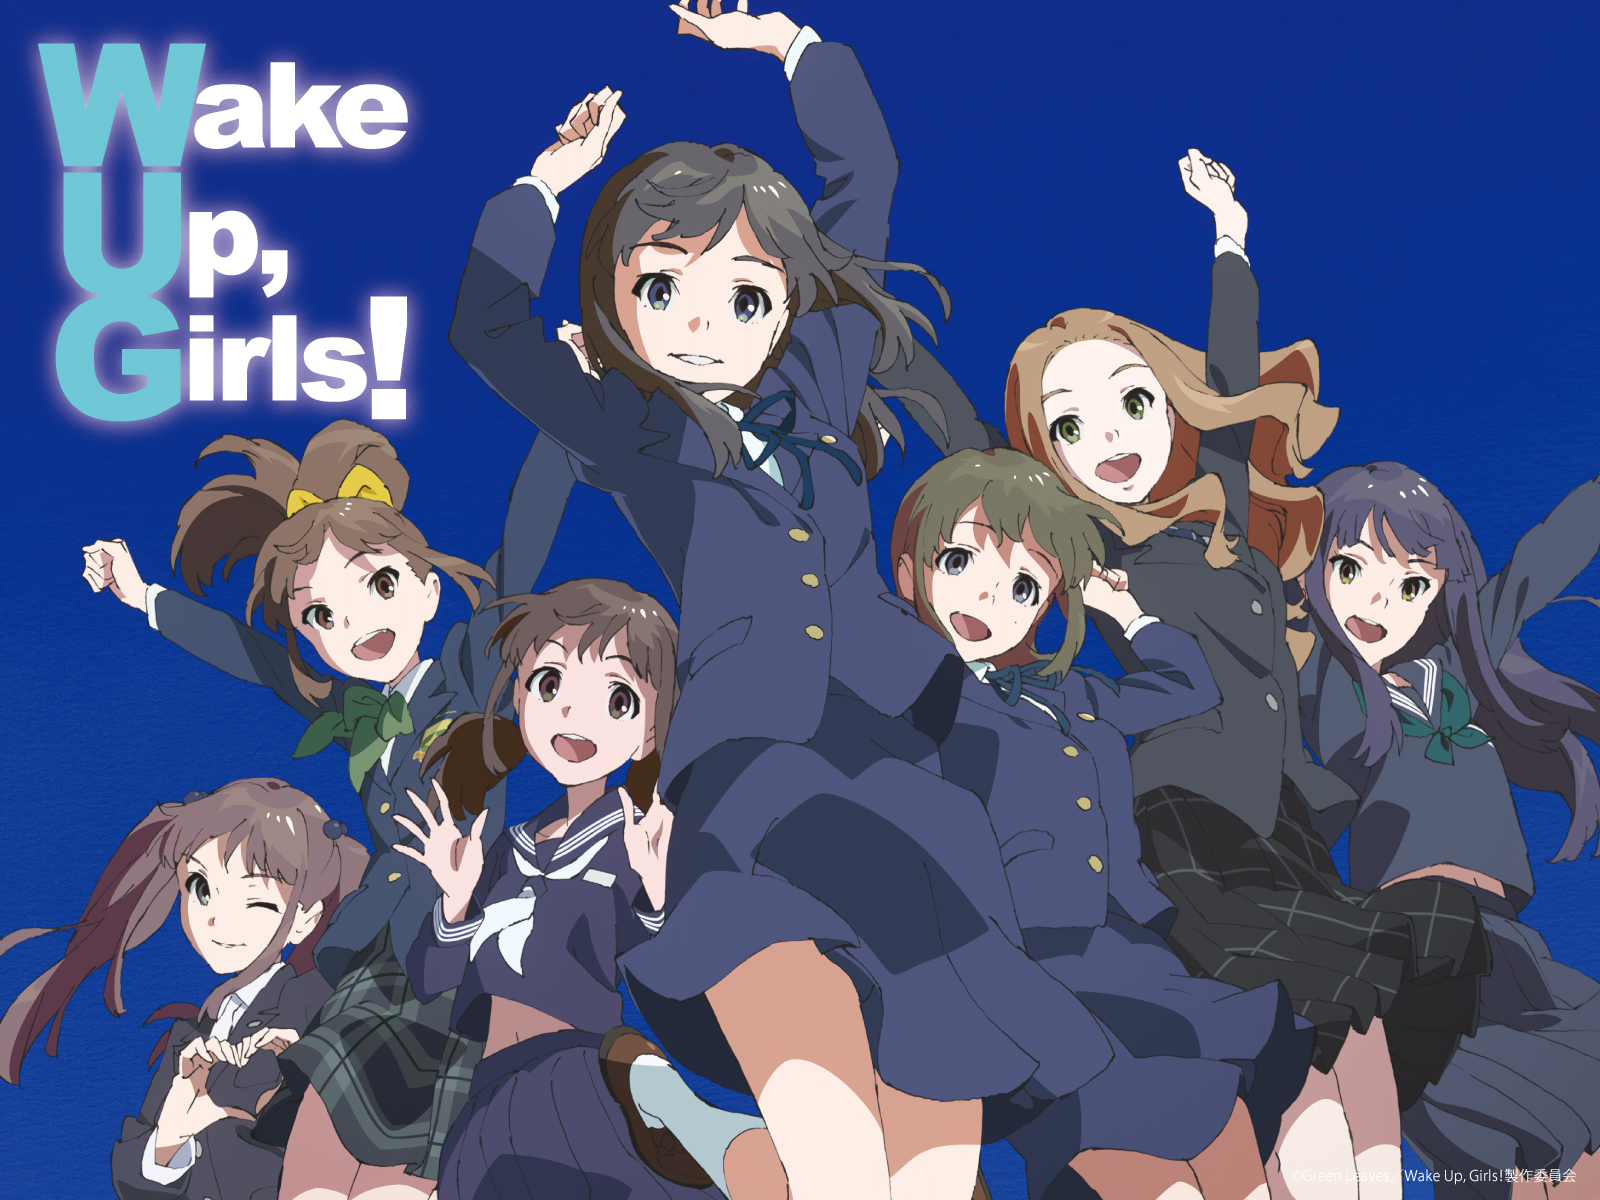 Wake Up Girls! (Group) Wallpaper Anime Image Board